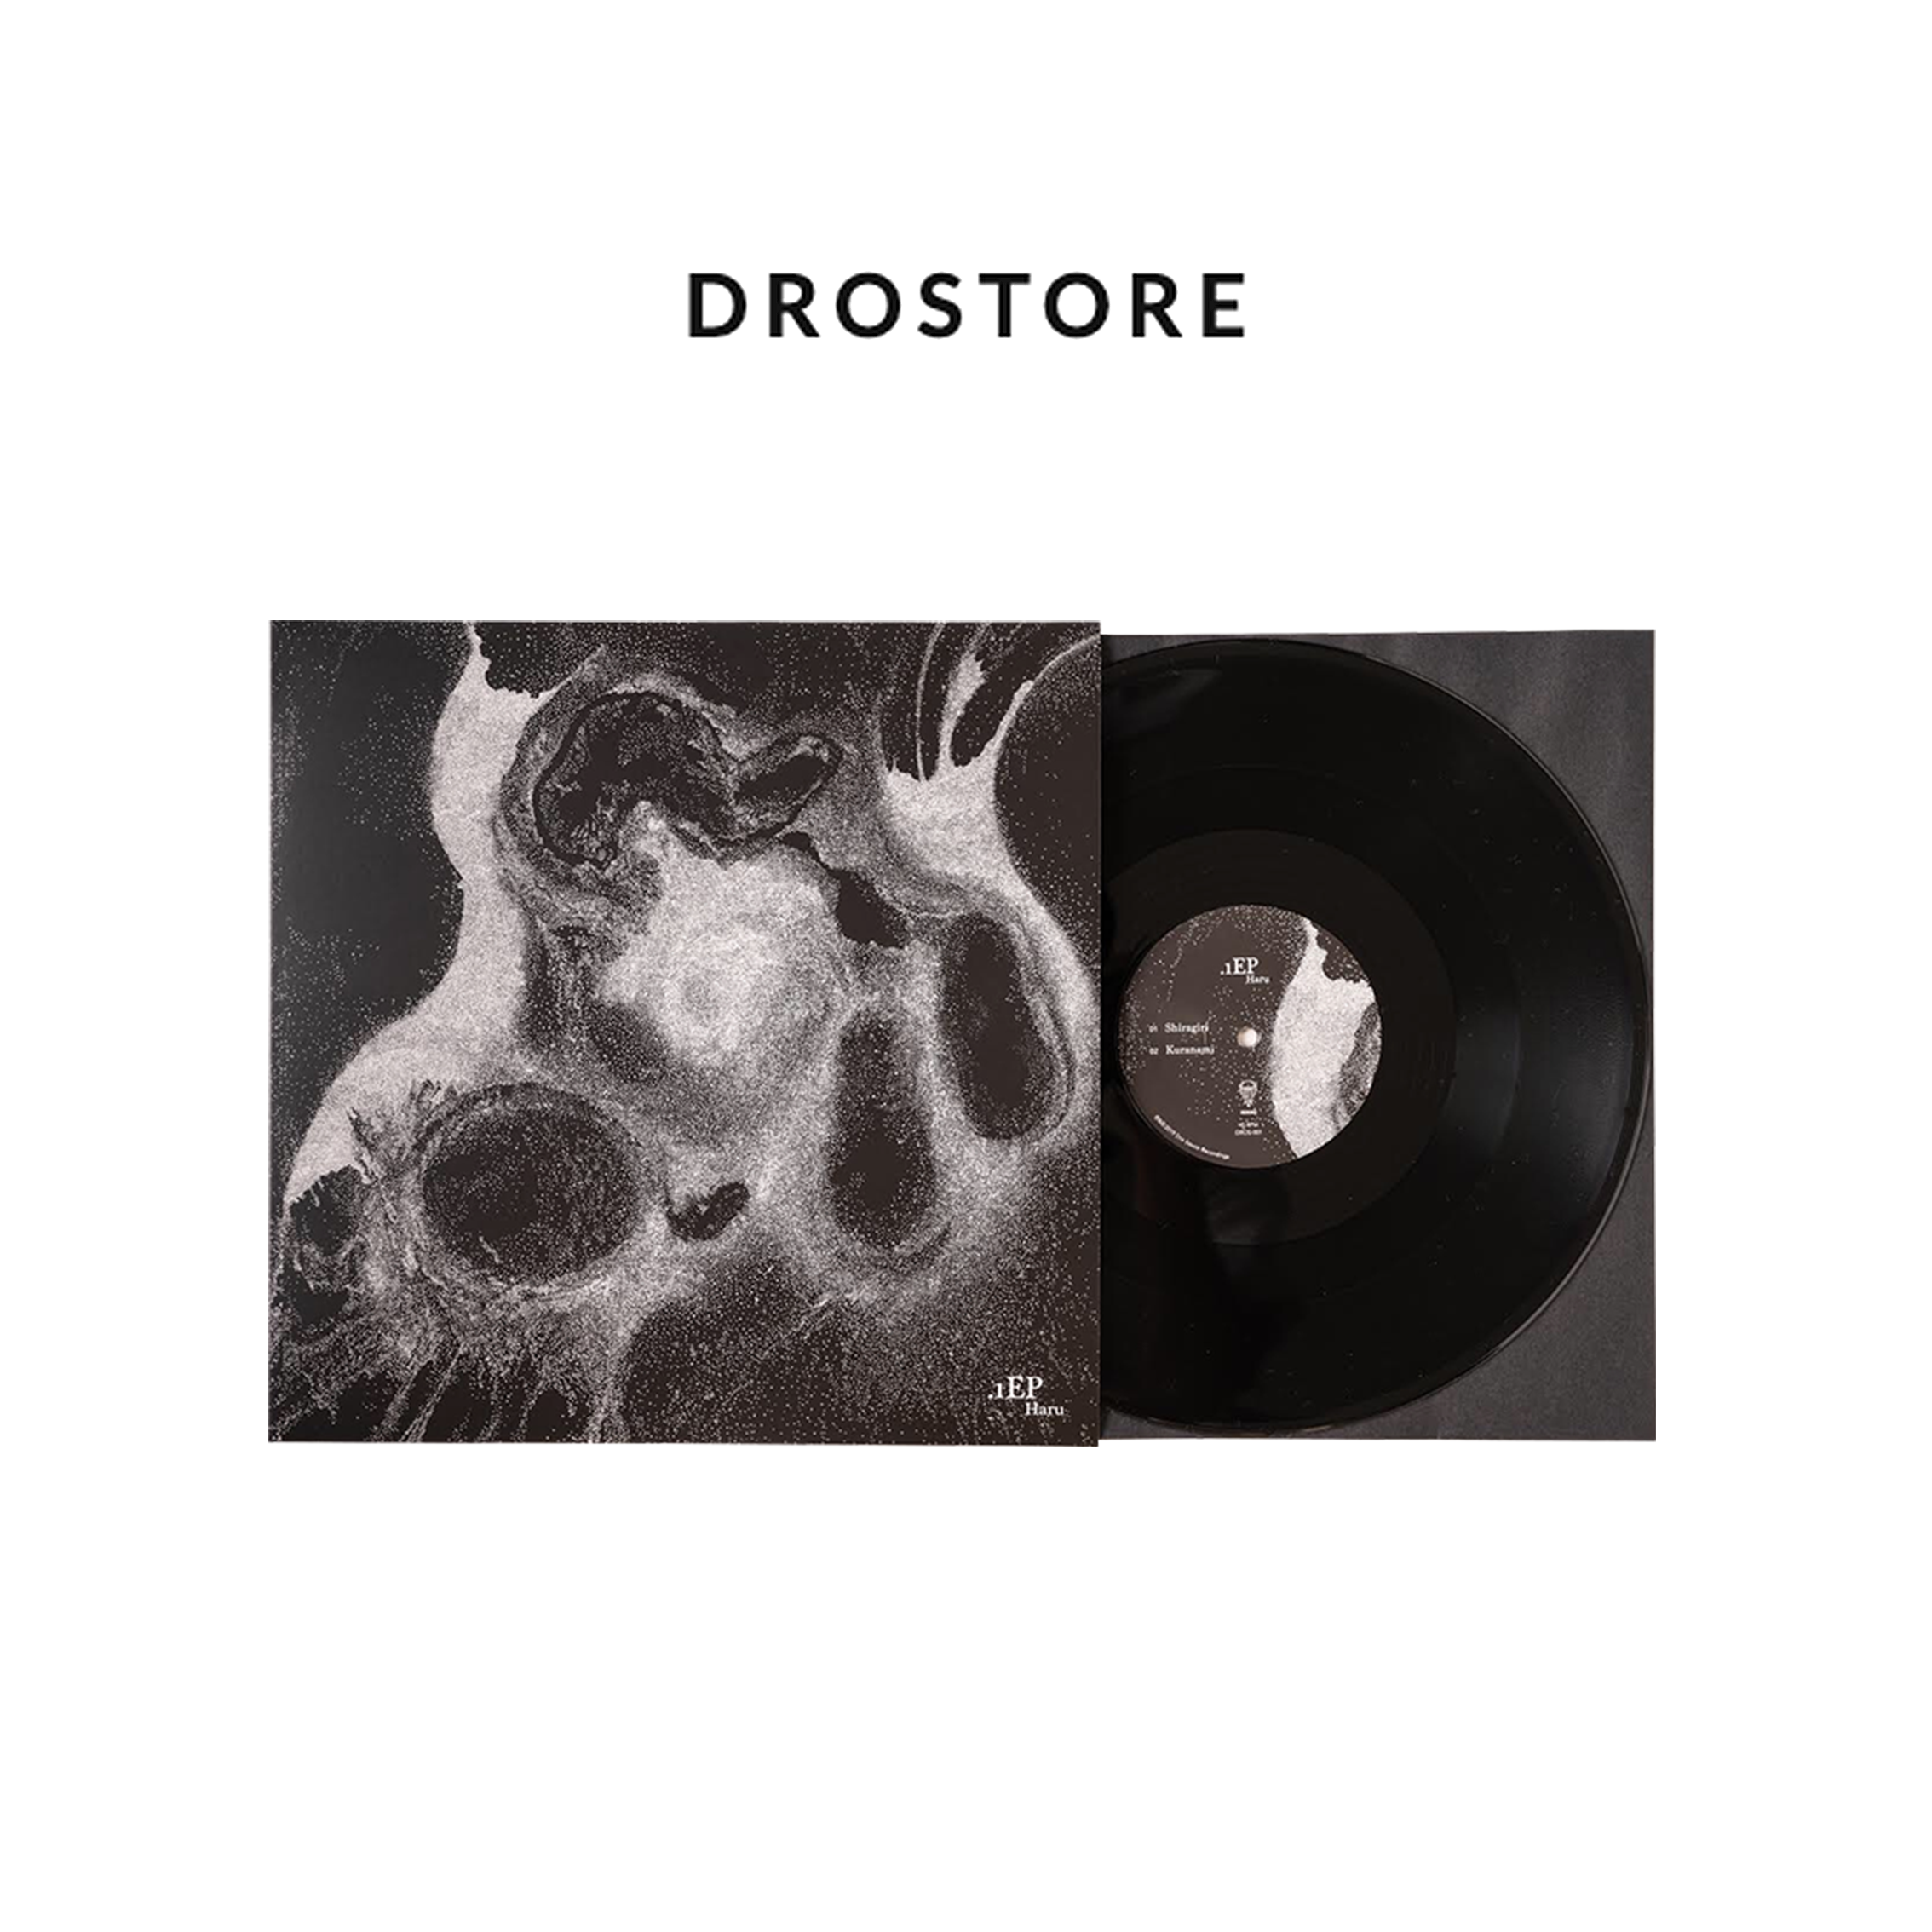 2019.7.1 Mon. Drostore Released